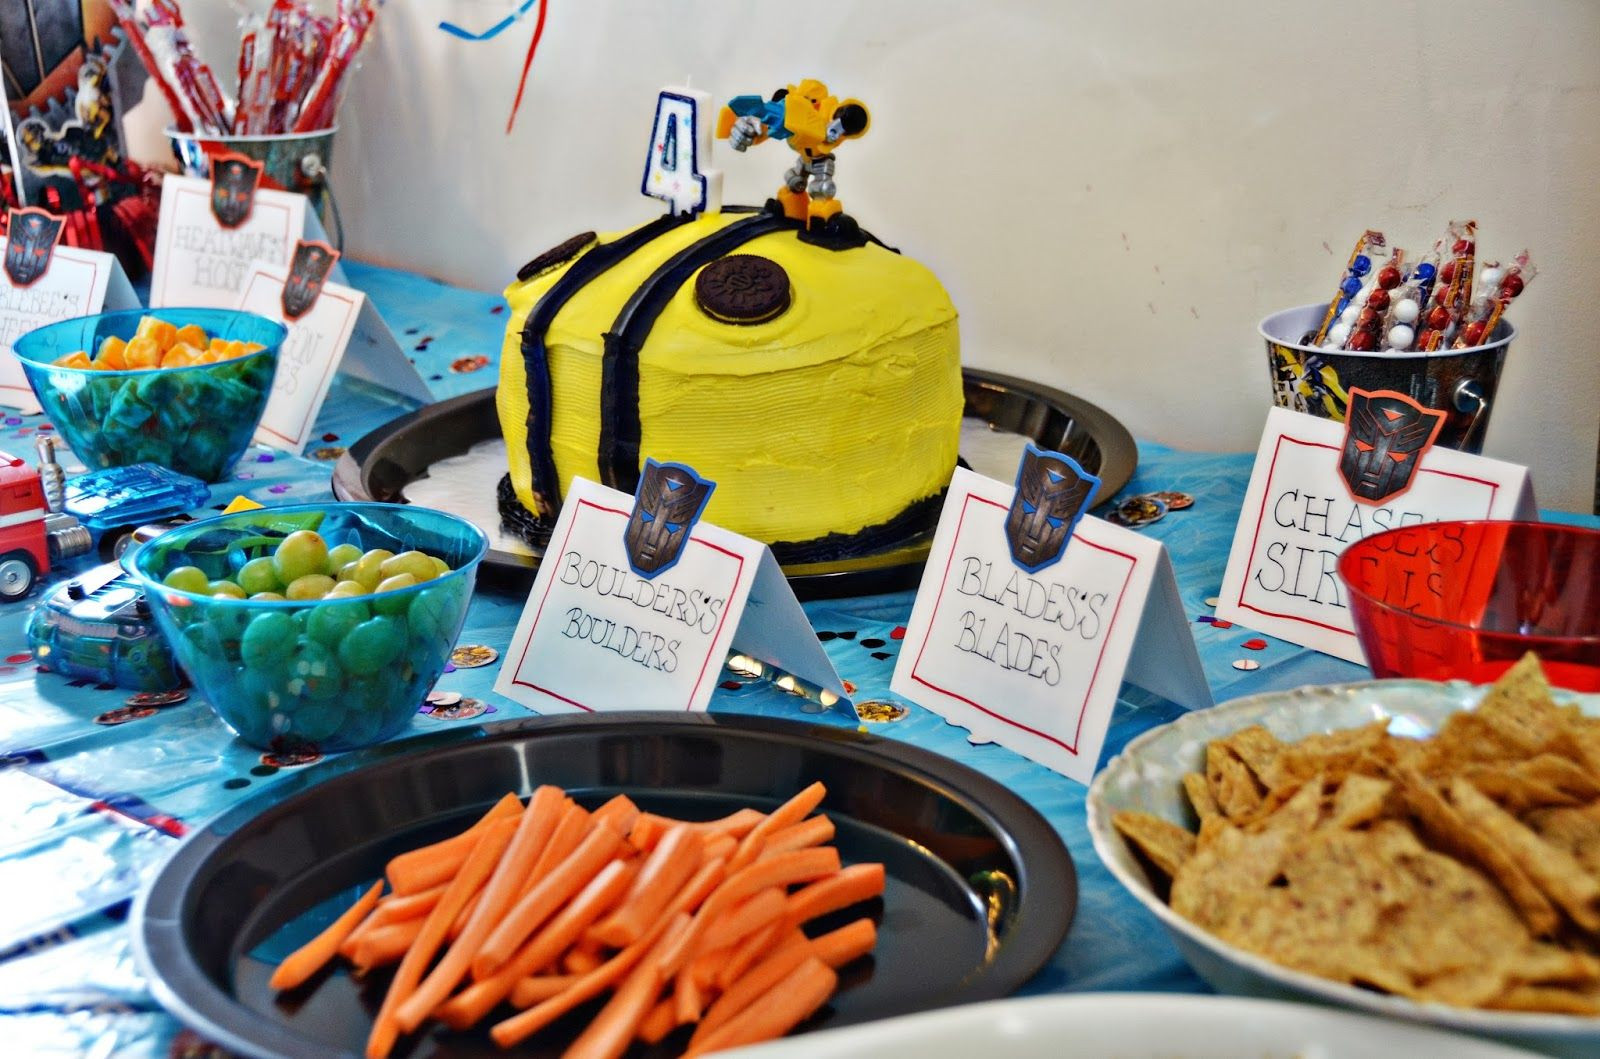 Rescue Bots Birthday Party
 Rescue Bot Birthday Party Ideas